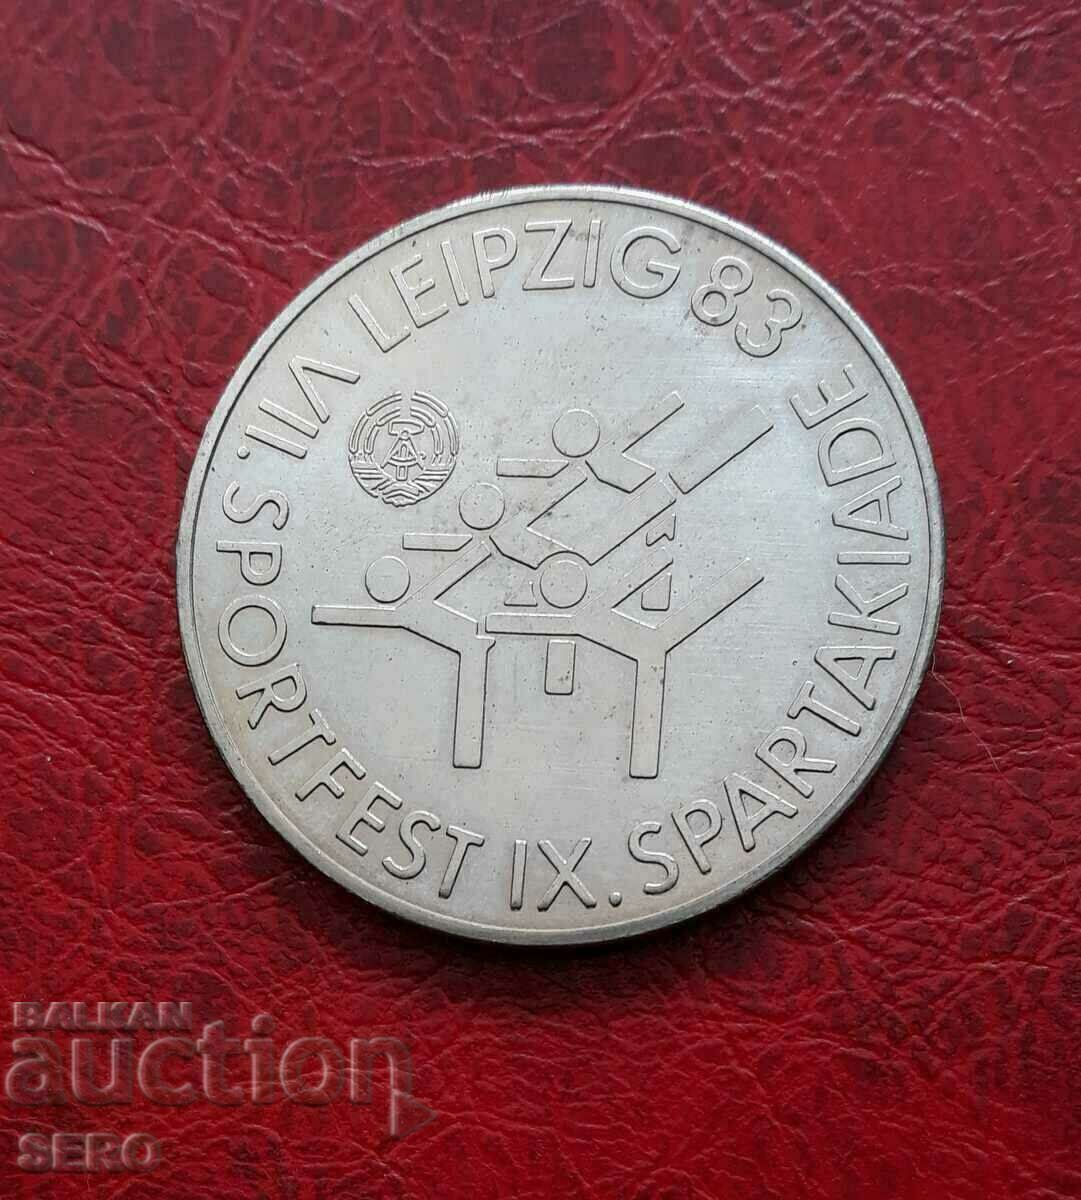 Germany-GDR-medal -IX Spartakiad Leipzig 1983